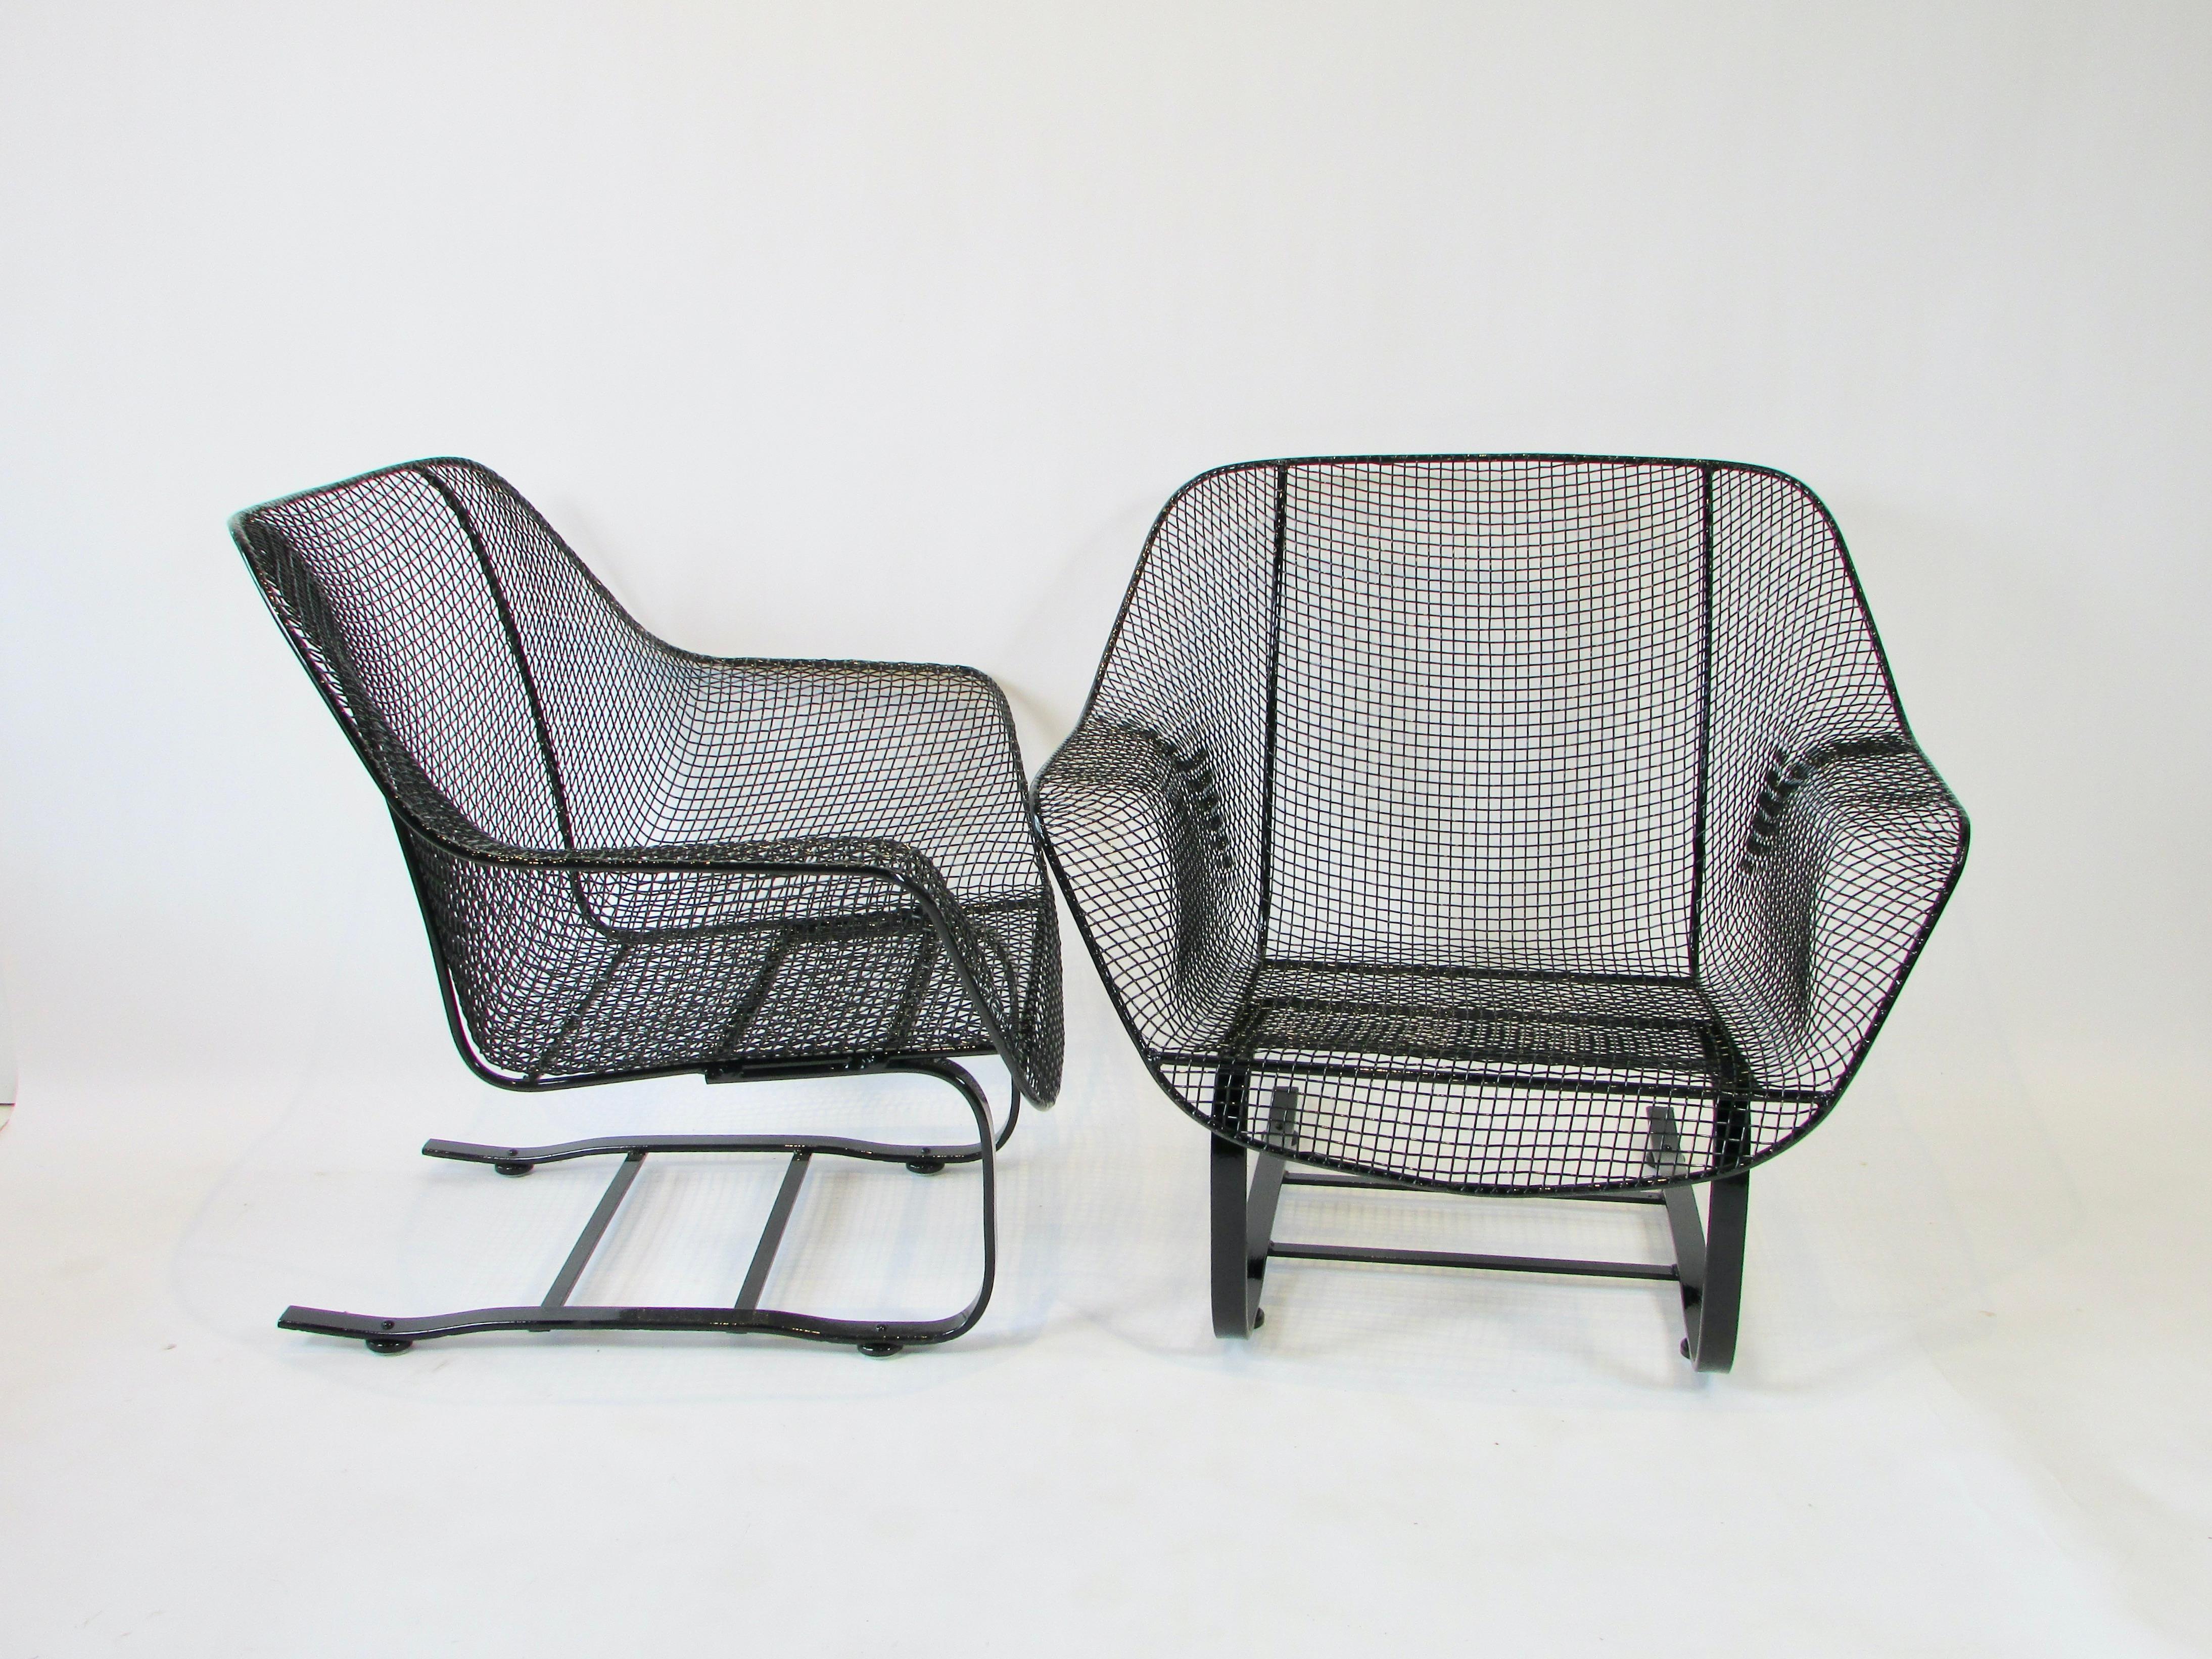 wrought iron spring chairs -china -b2b -forum -blog -wikipedia -.cn -.gov -alibaba